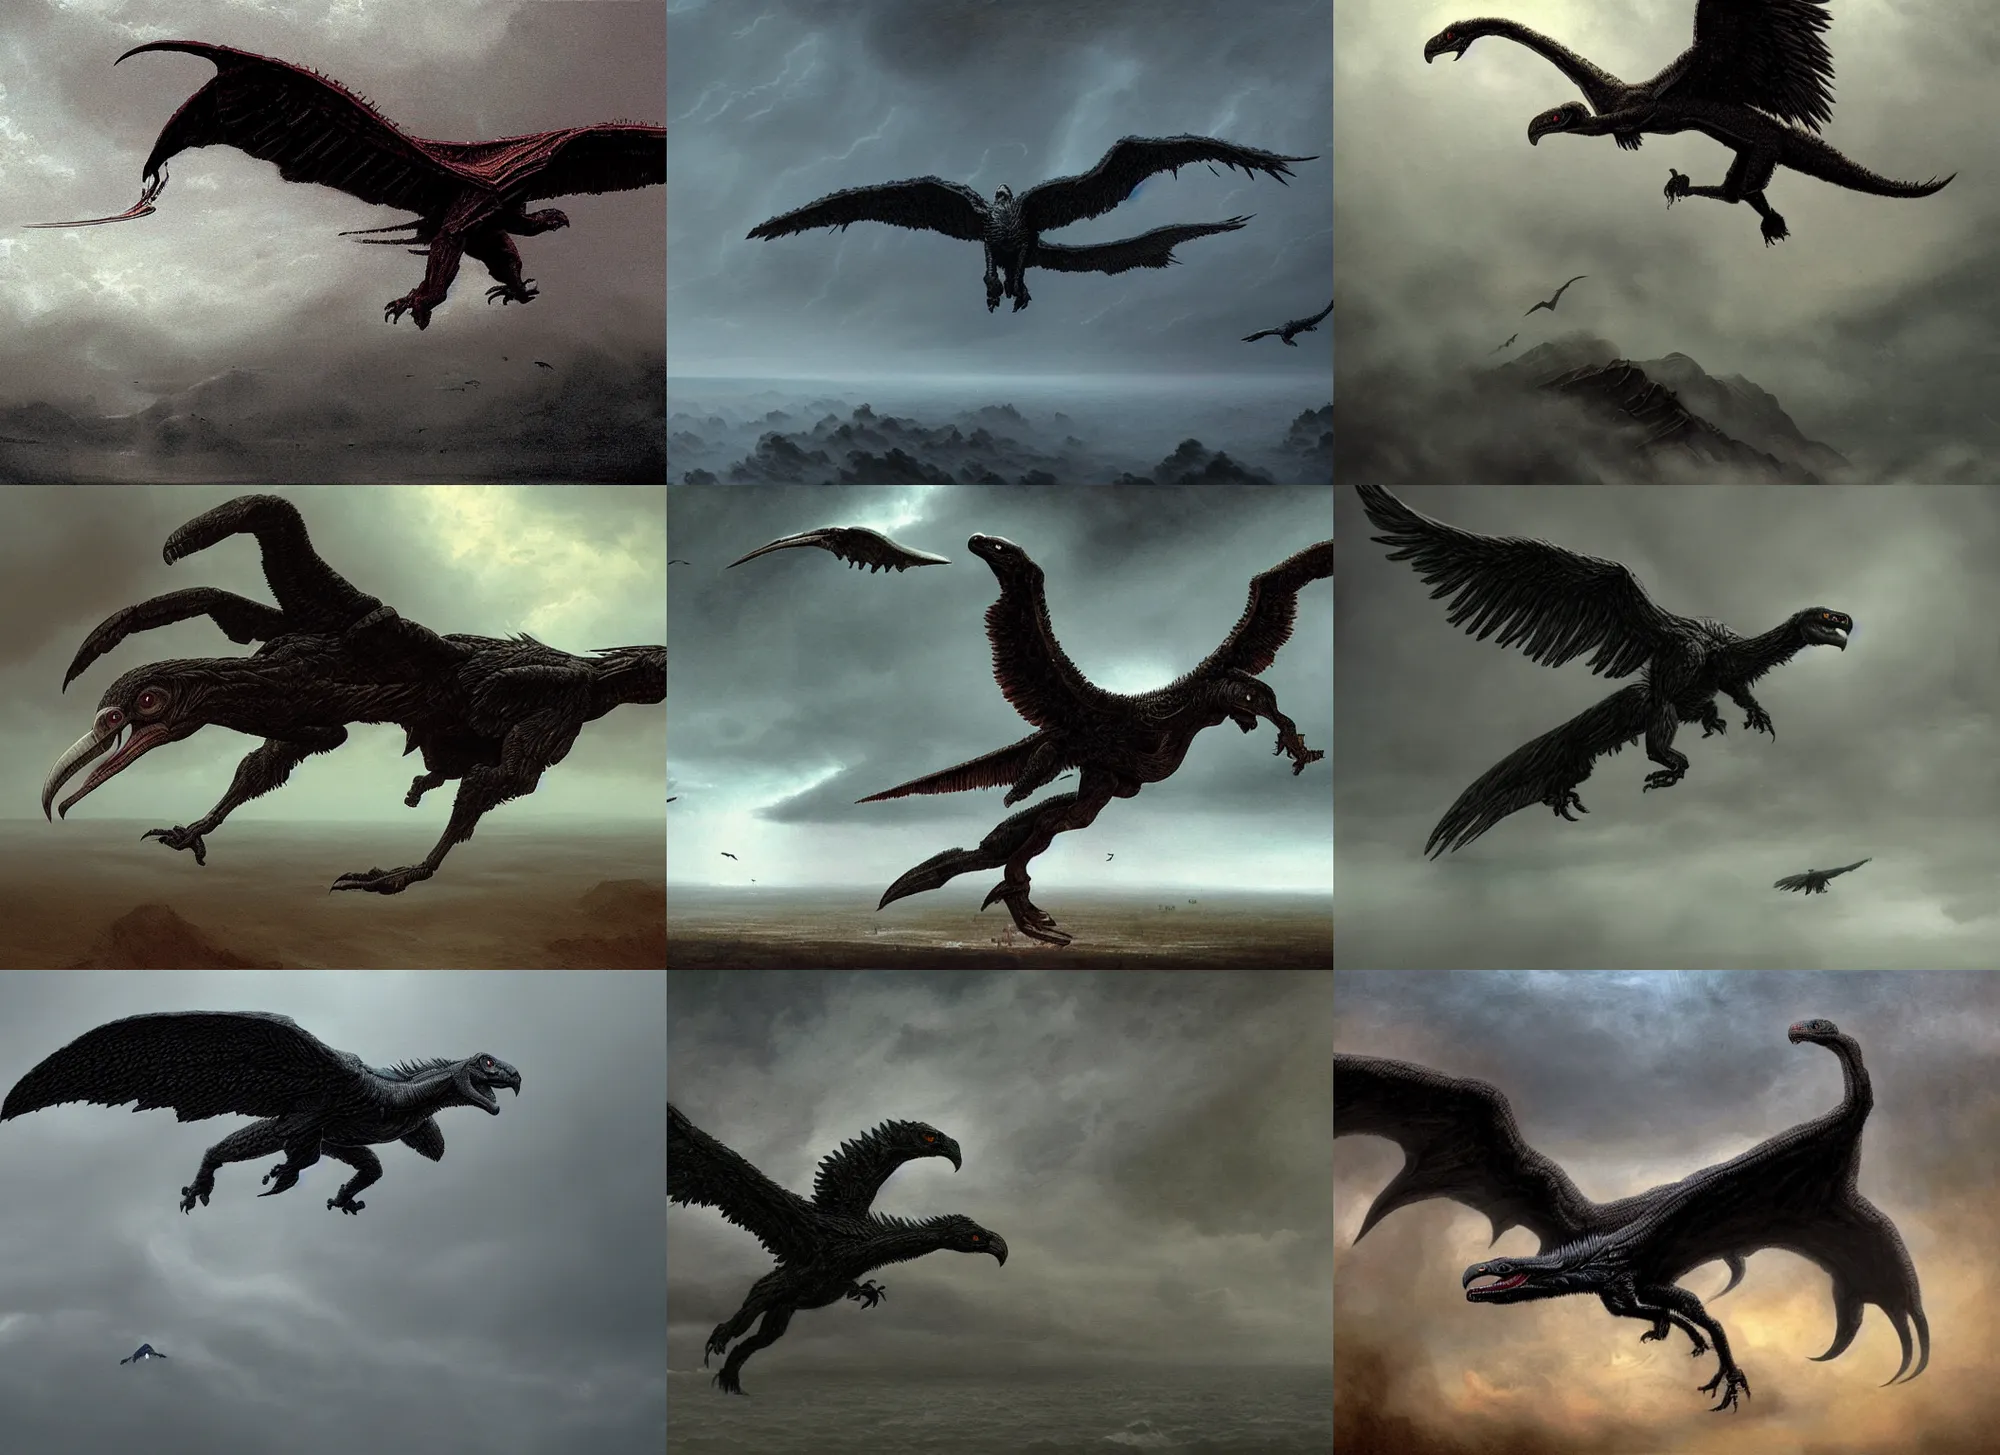 Prompt: giant black velociraptor-vulture flying in storm, intricate, highly detailed, artstation, sharp focus, illustration, rutkowski, beksinski, giger, barlowe